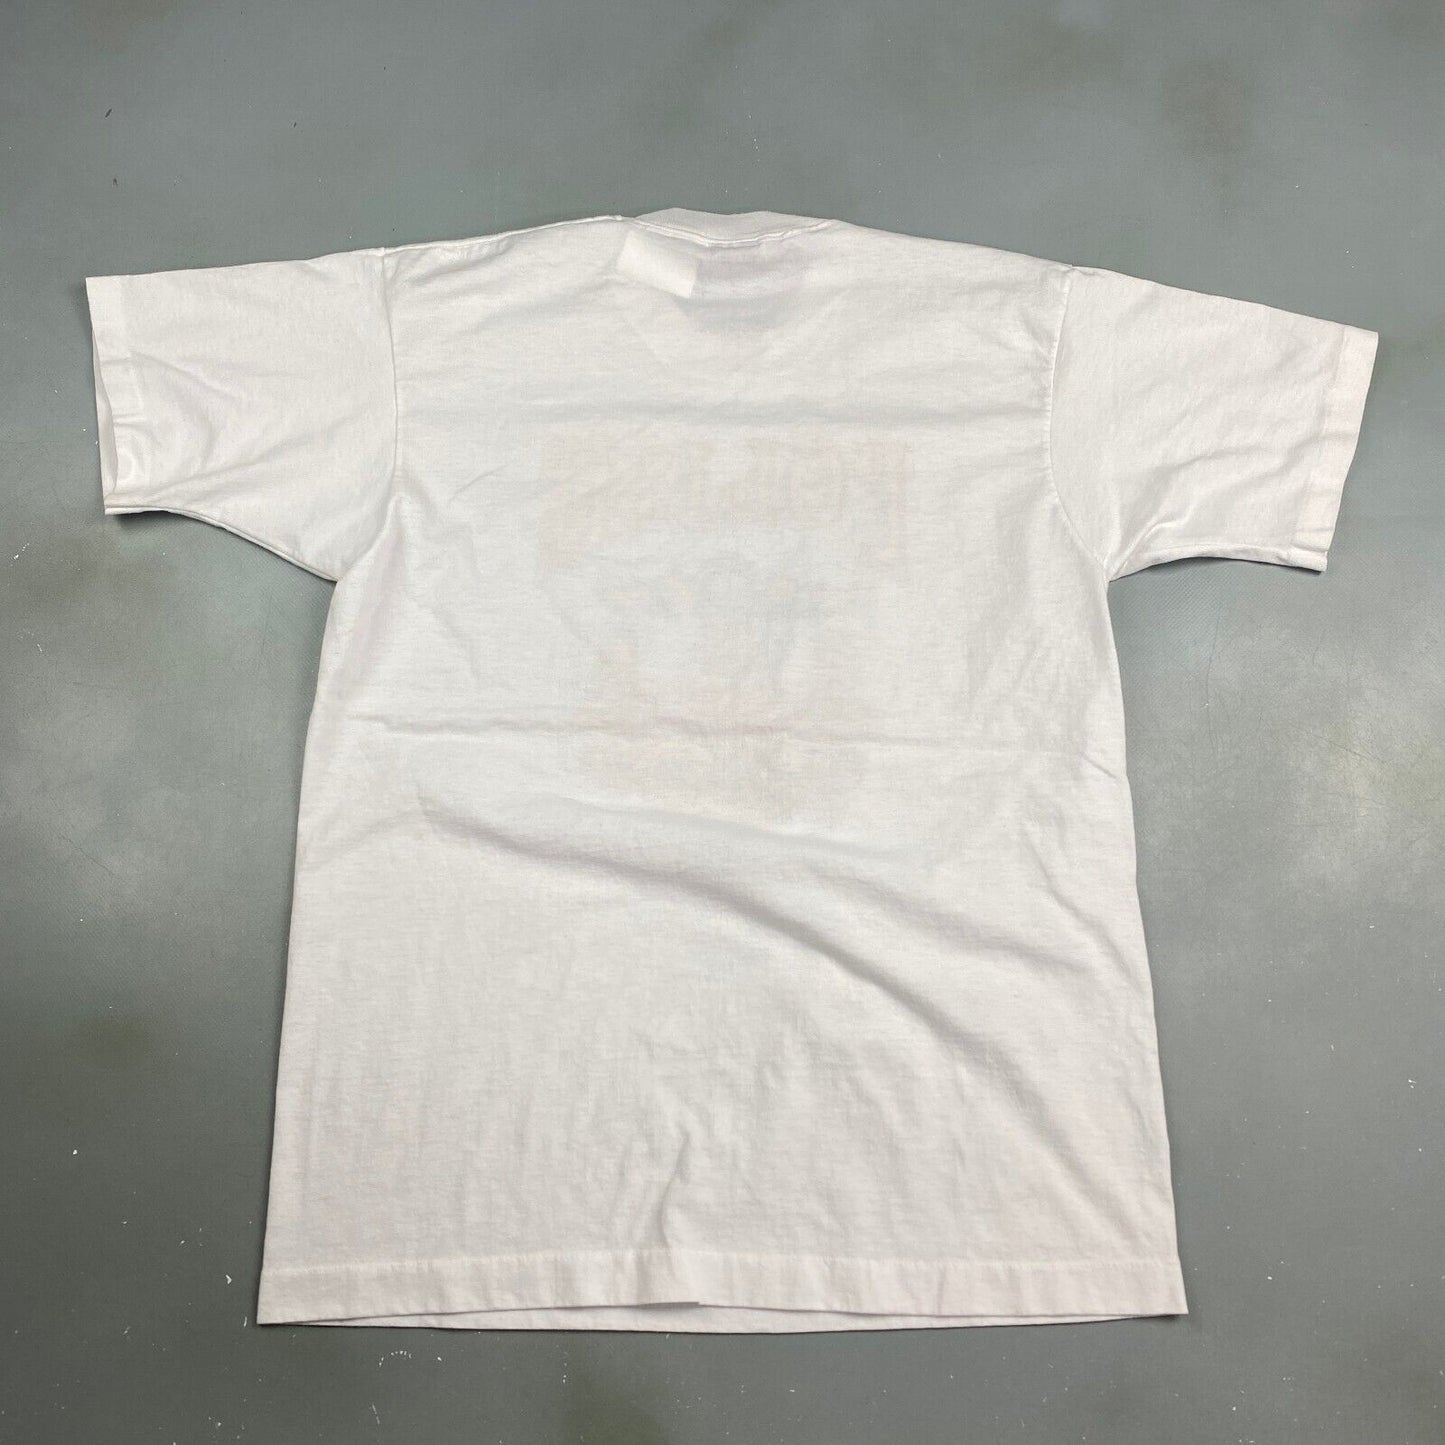 VINTAGE 80s/90s Polish Crest White T-Shirt sz Medium Men Adult